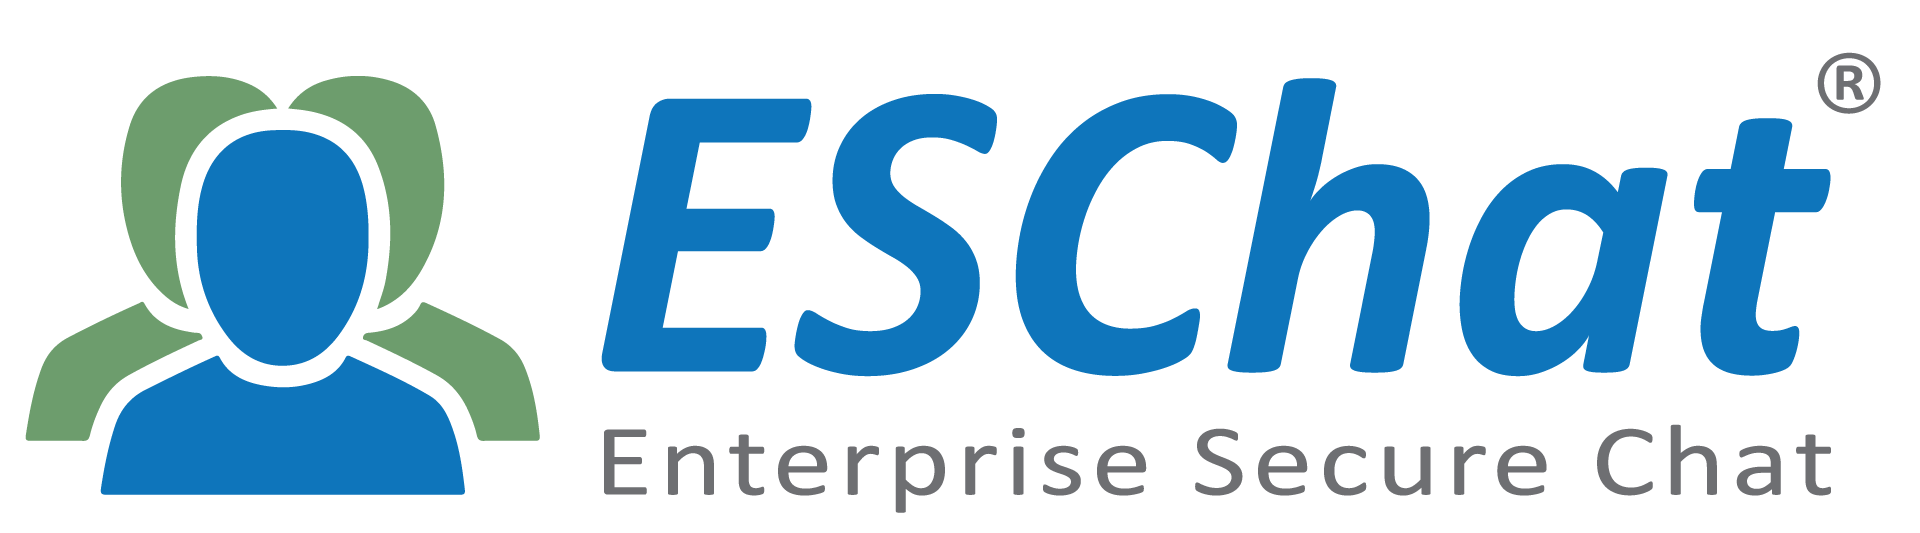 The logo for eschat enterprise secure chat